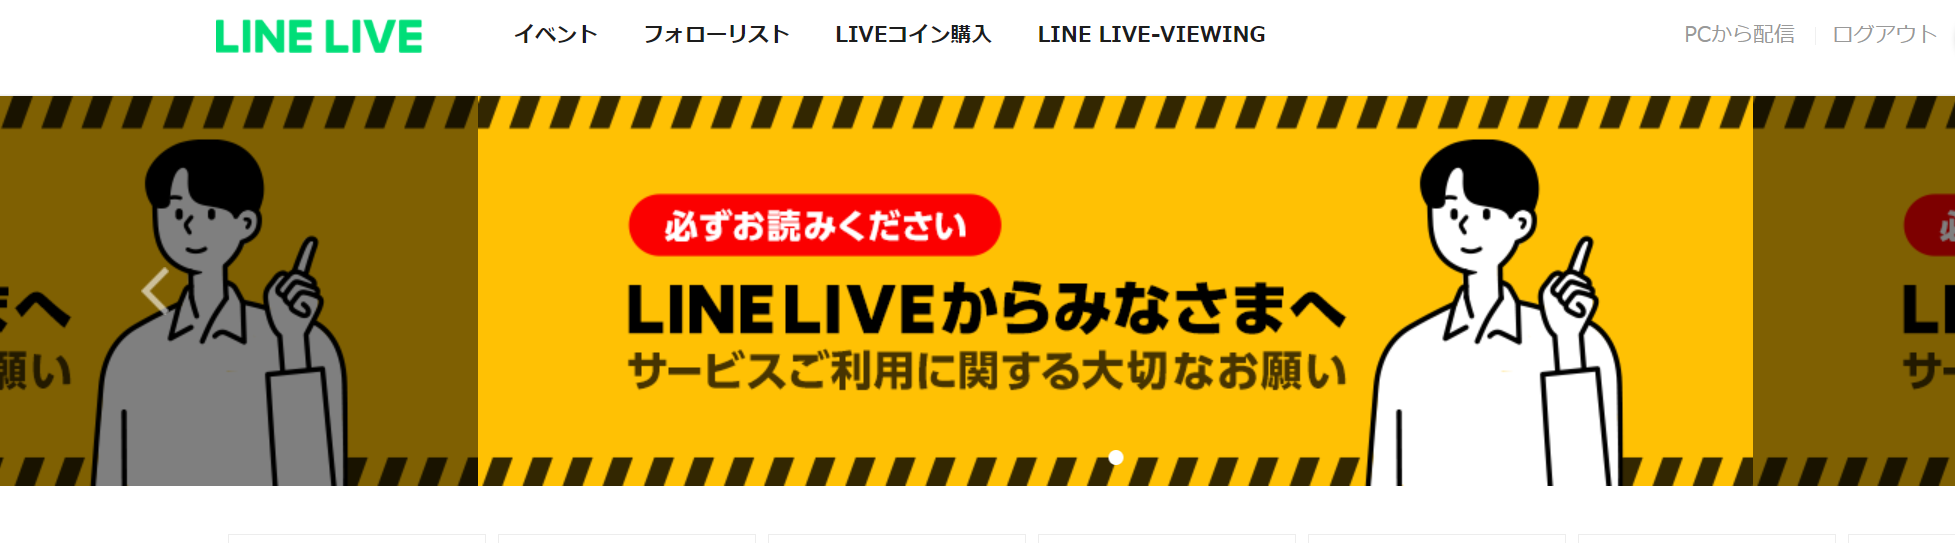 LINE LIVEの公式サイト画面です。